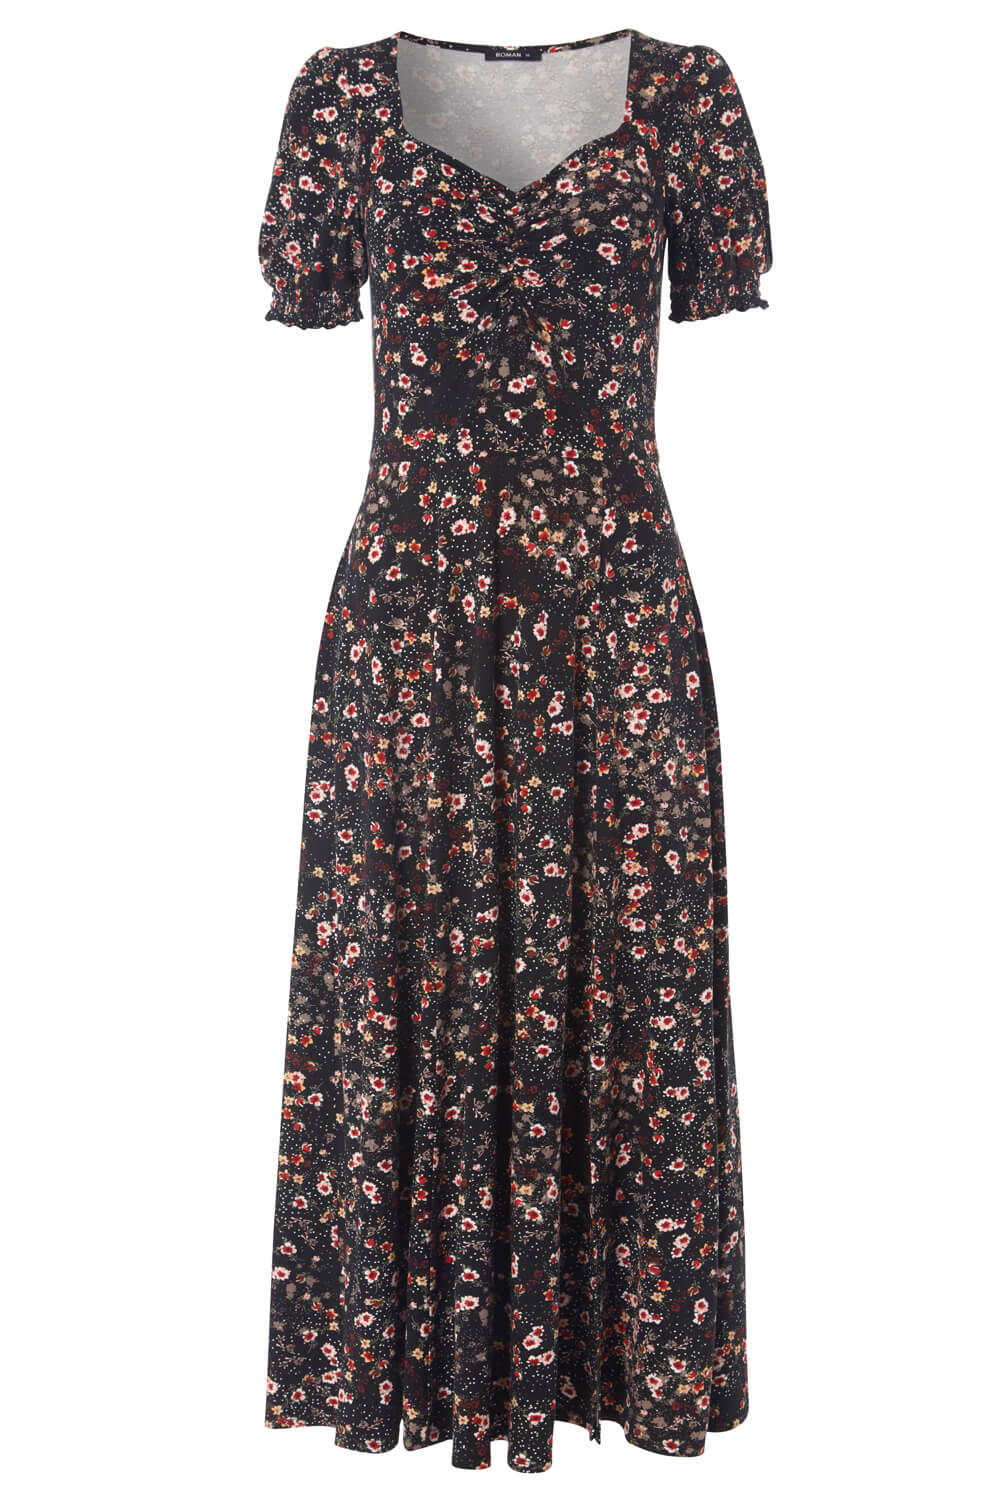 Ditsy Floral Ruched Midi Dress in Black - Roman Originals UK